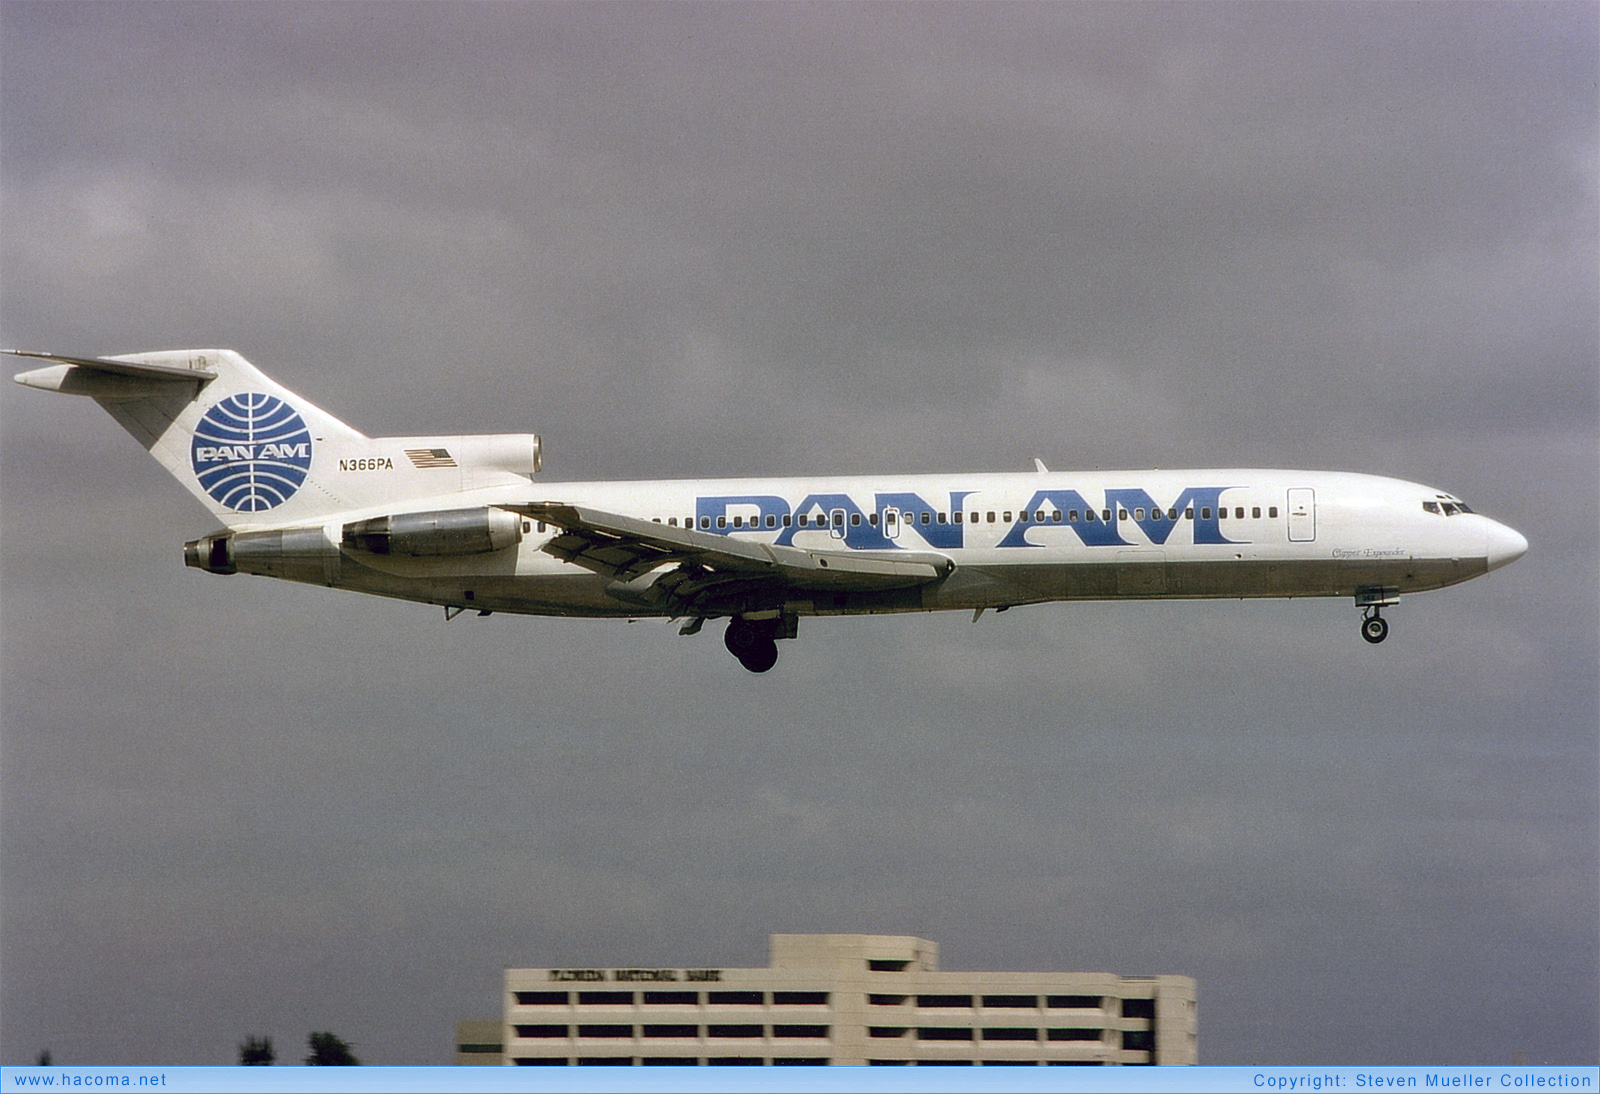 Foto von N366PA - Pan Am Clipper Expounder - Miami International Airport - 1989